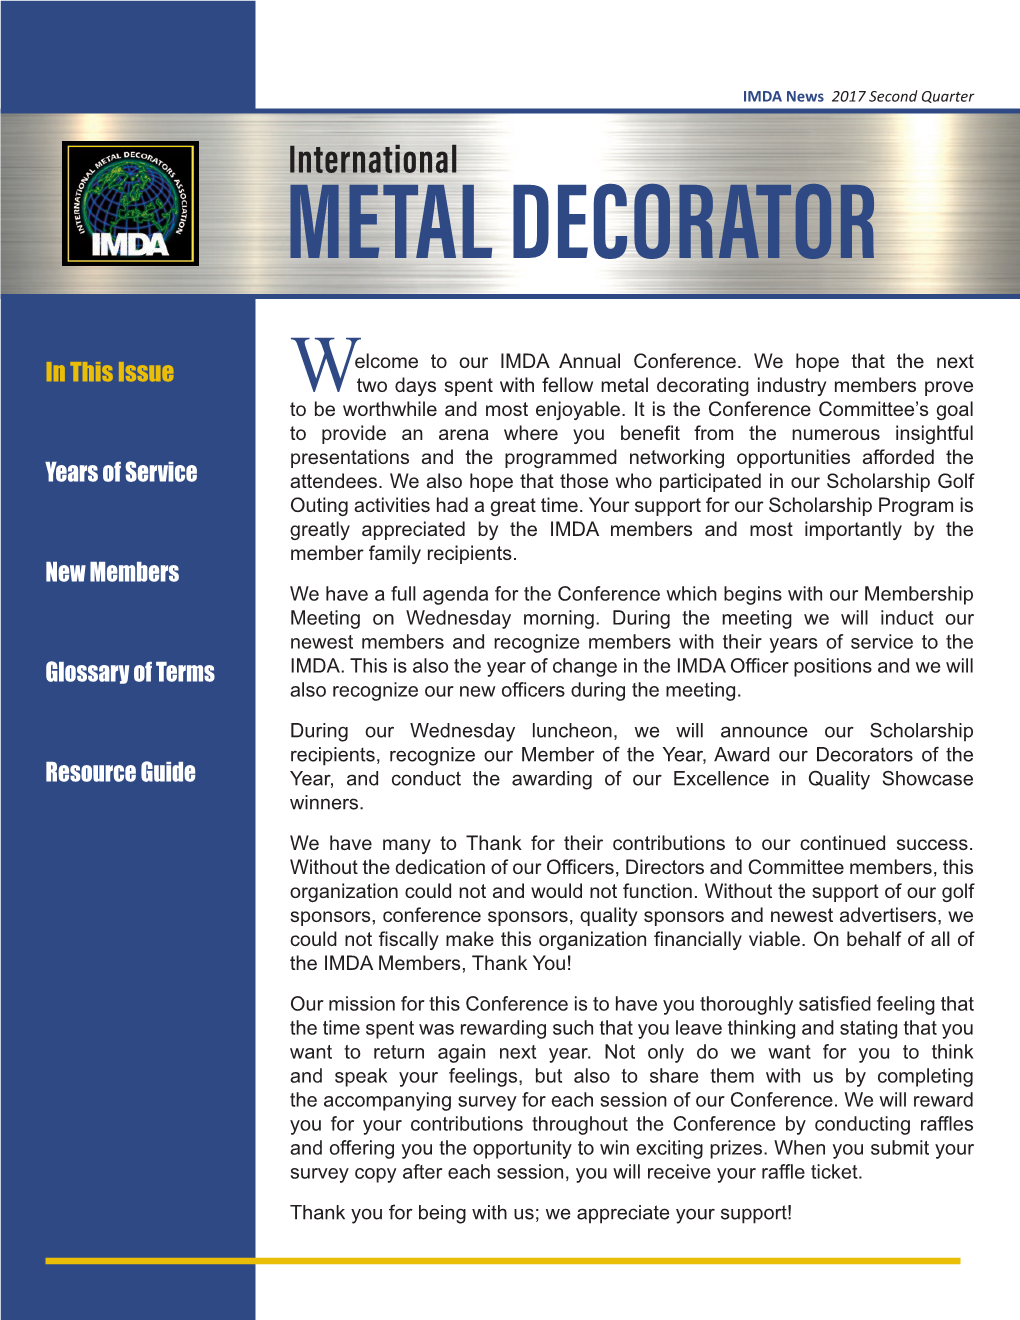 Metal Decorator